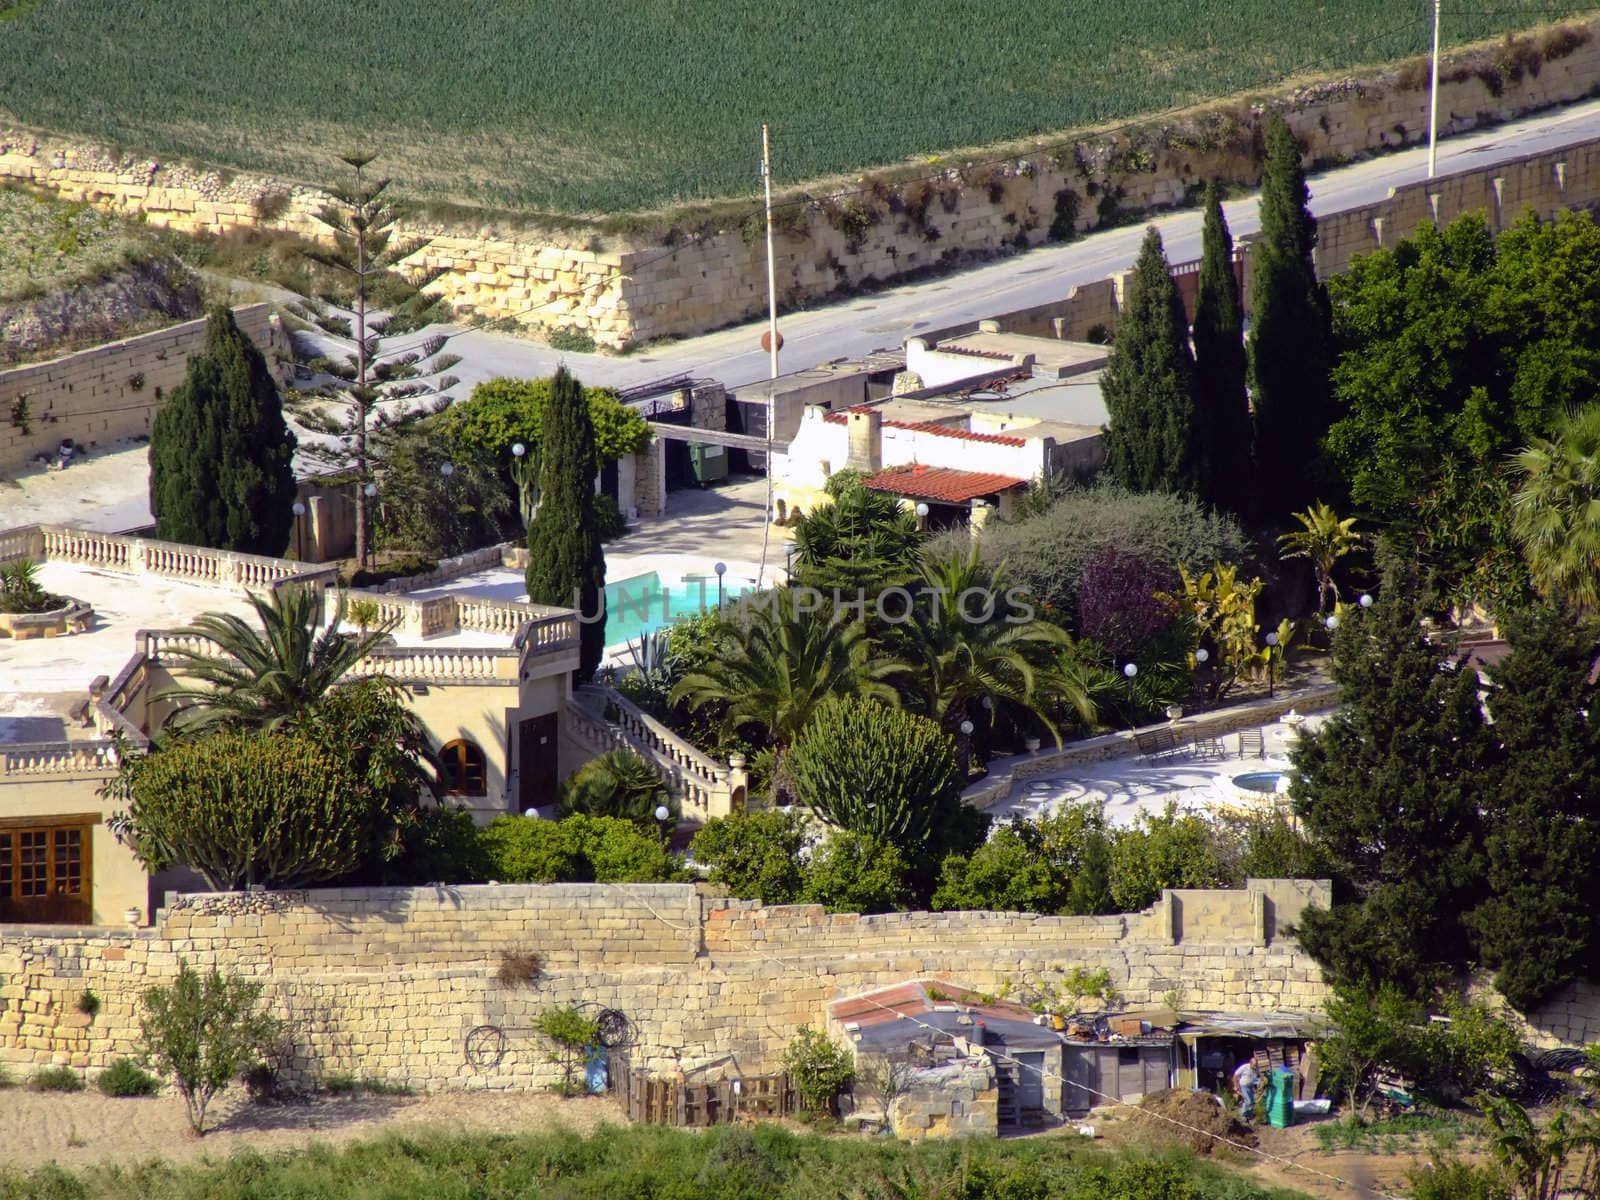 Typical countryside villa on the Mediterranean island of Malta